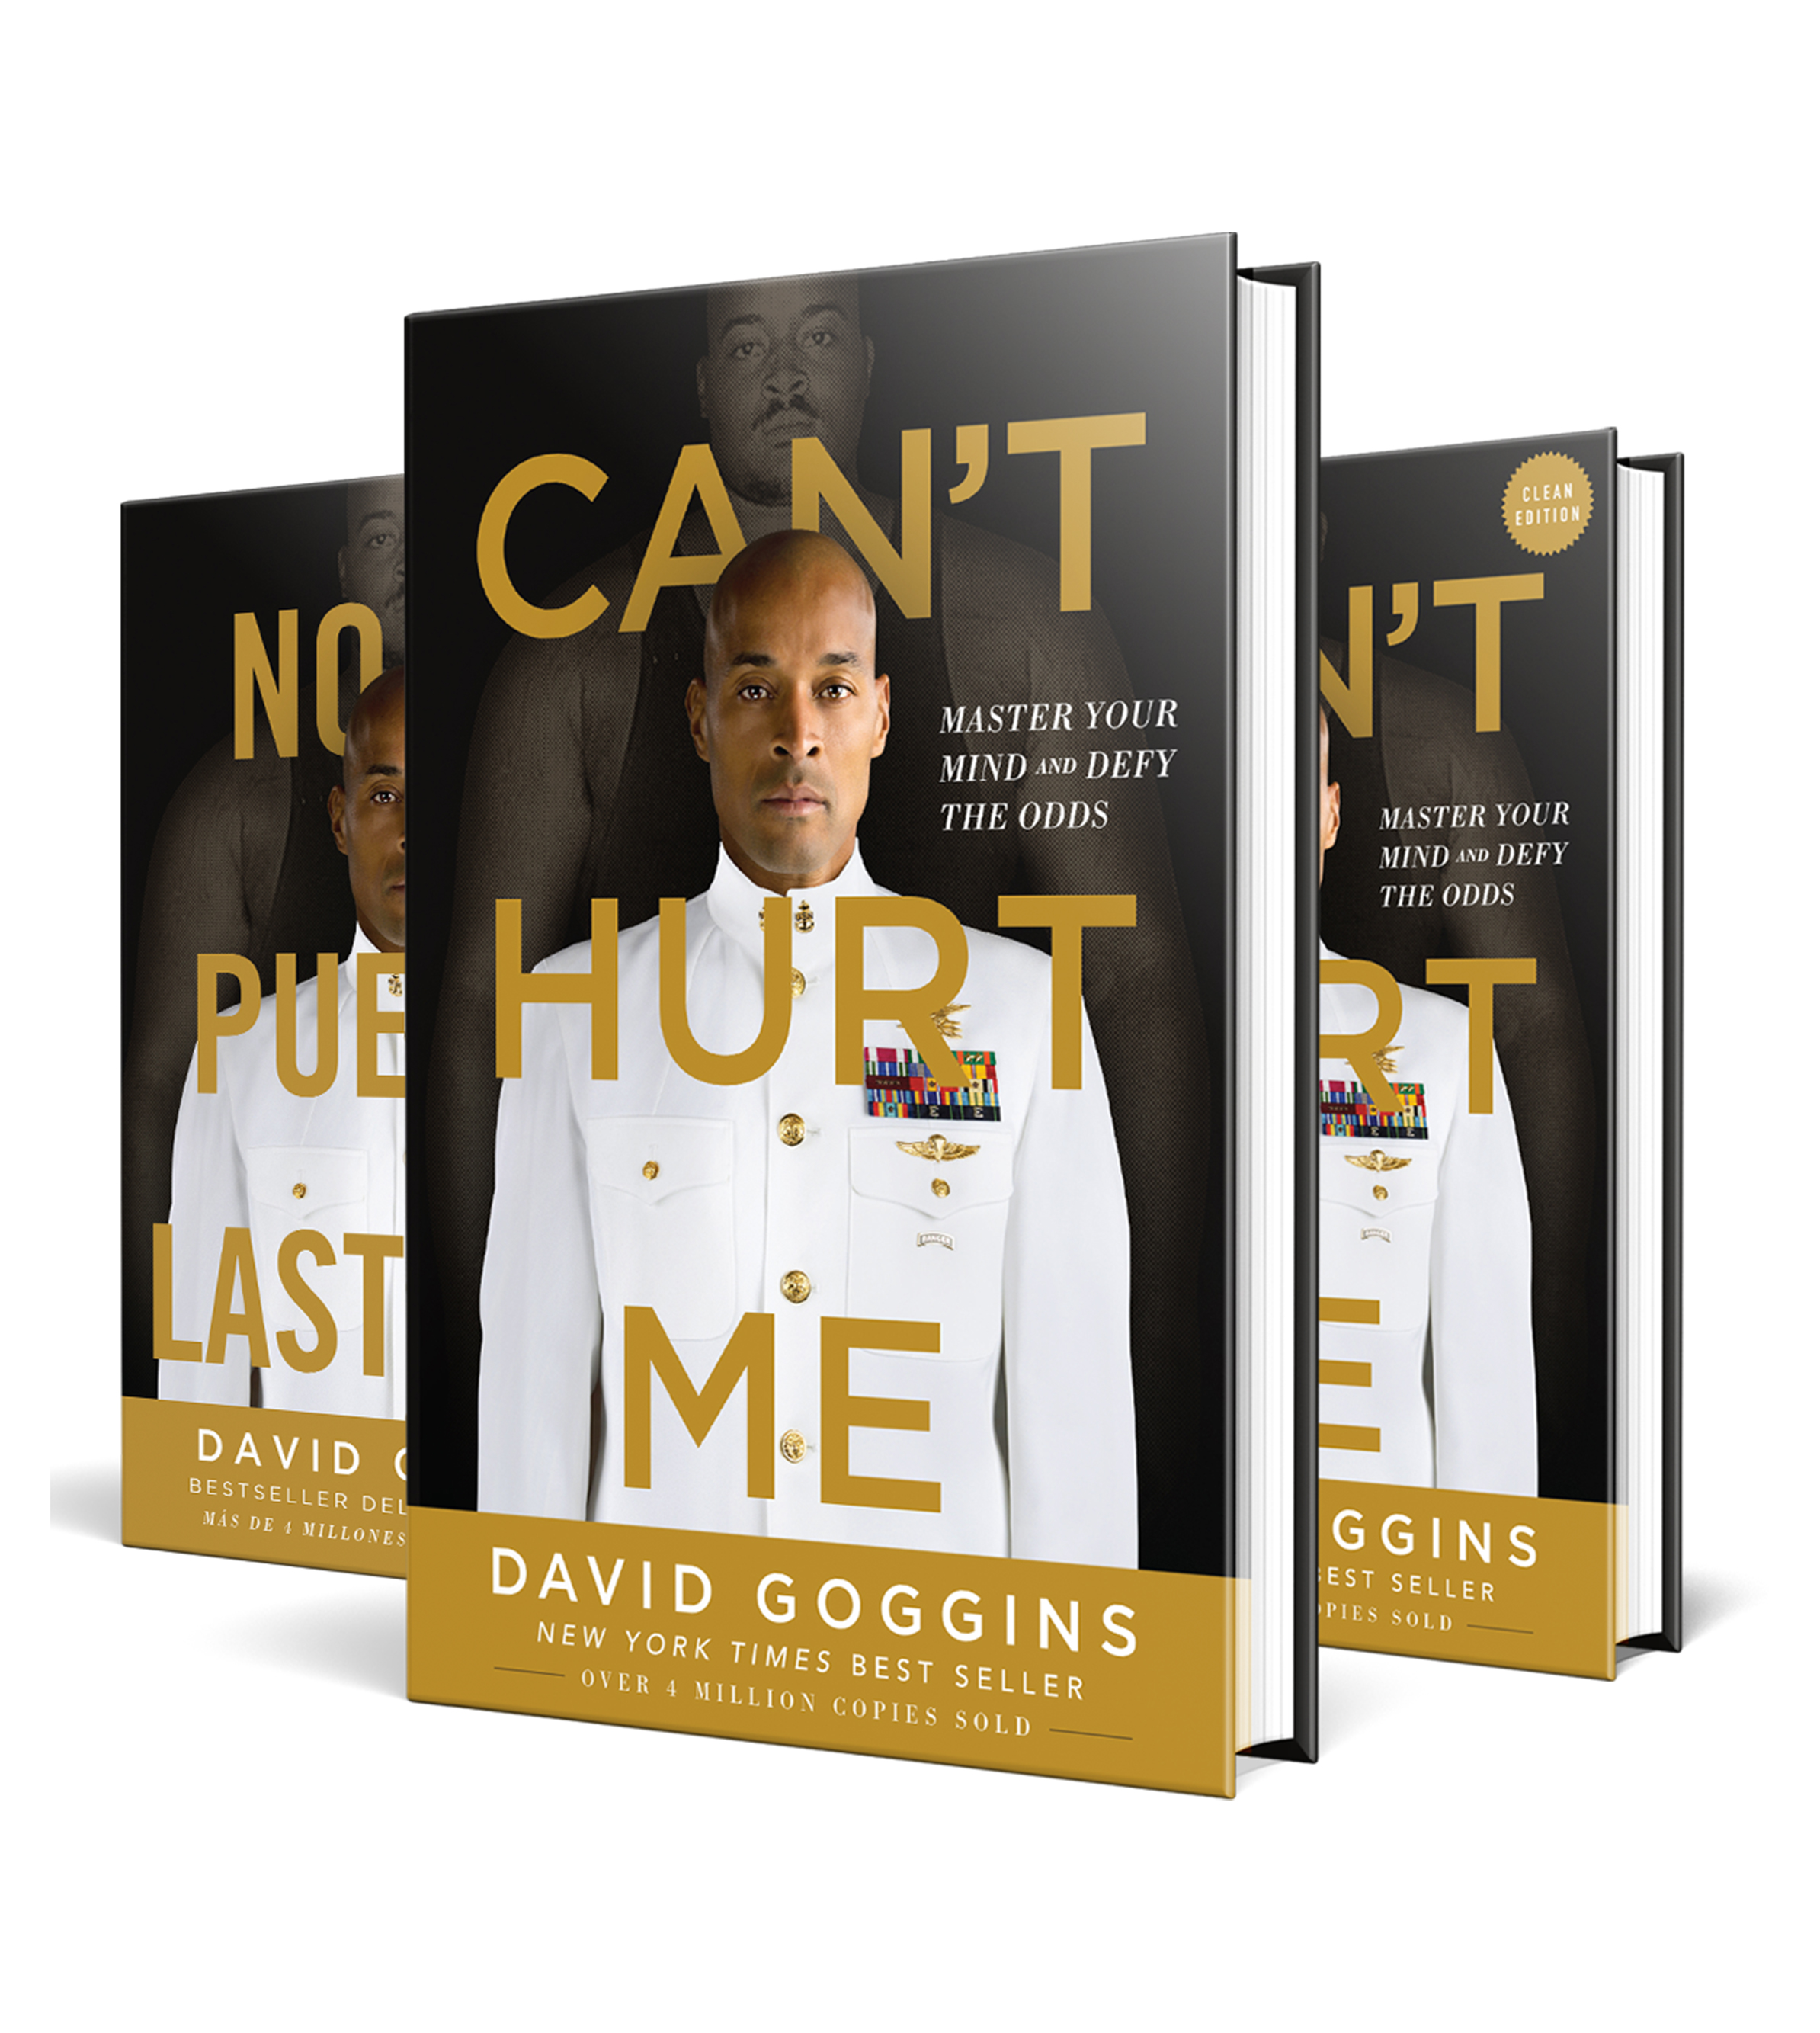 No me puedes lastimar – David Goggins – Fassin Books Store